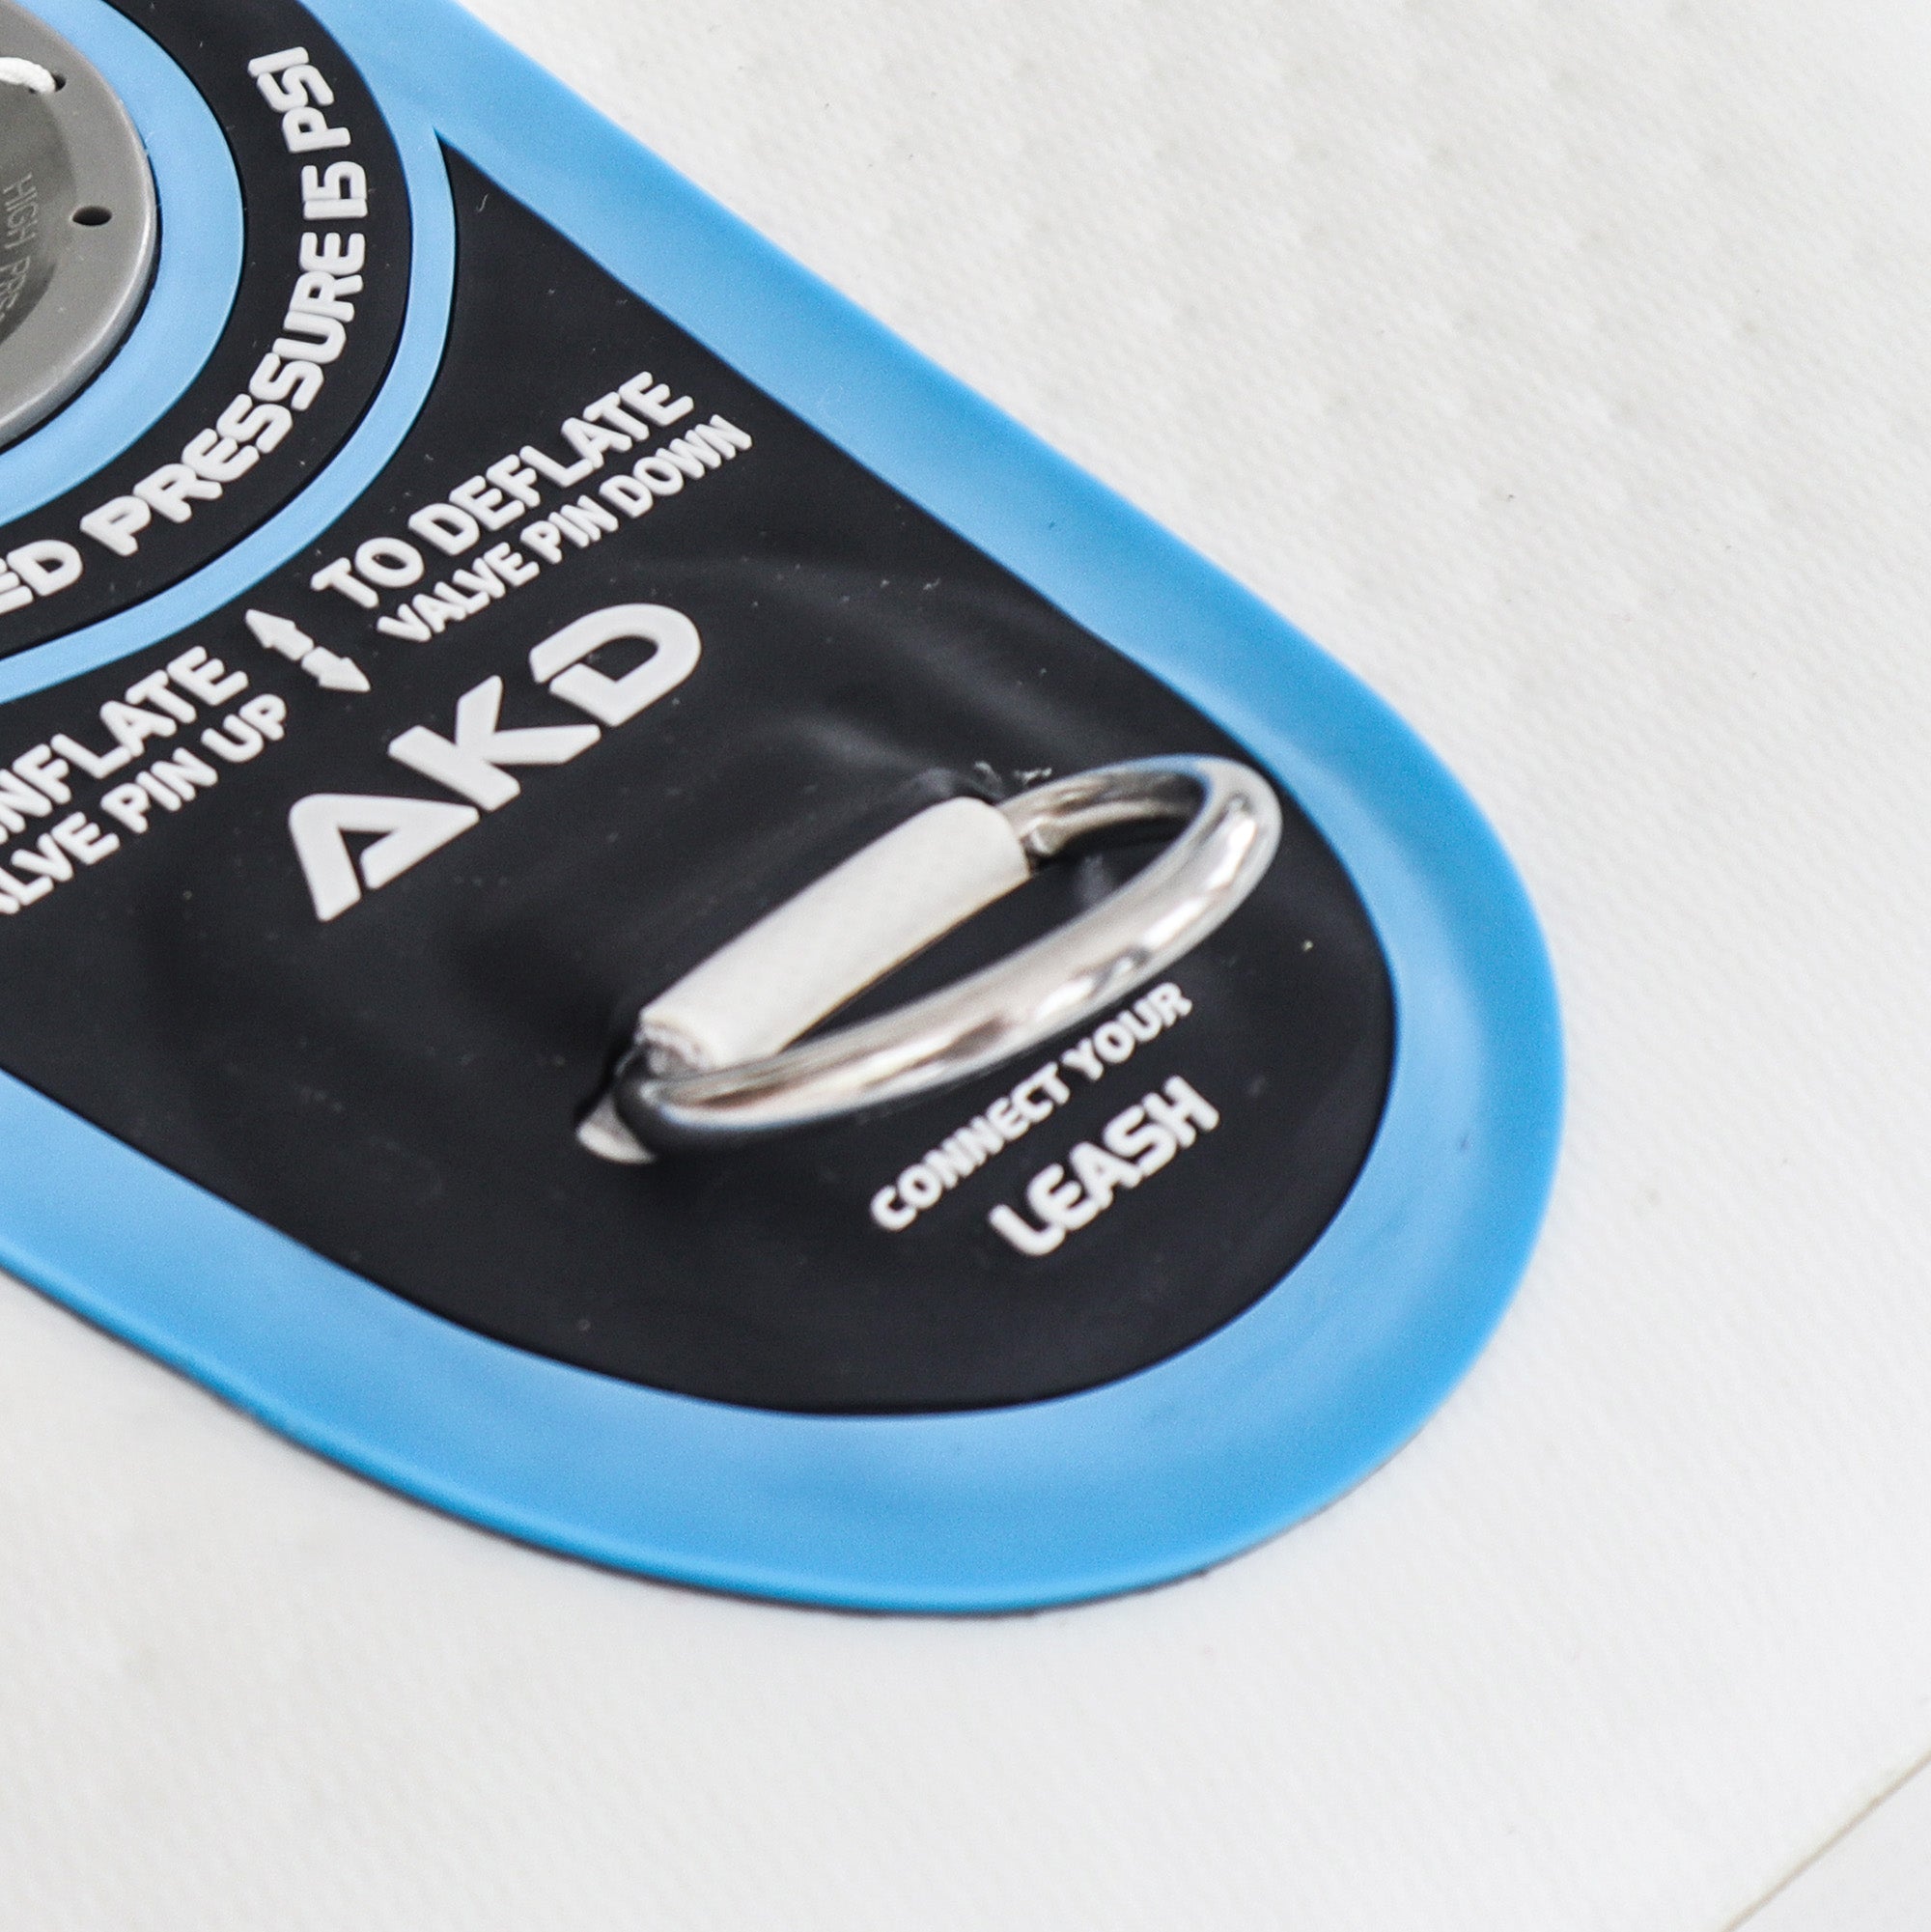 AKD SeaStar Stand up Paddle Board 10'8” 325x86x15cm SUP Board 165kg/346L (Blau)